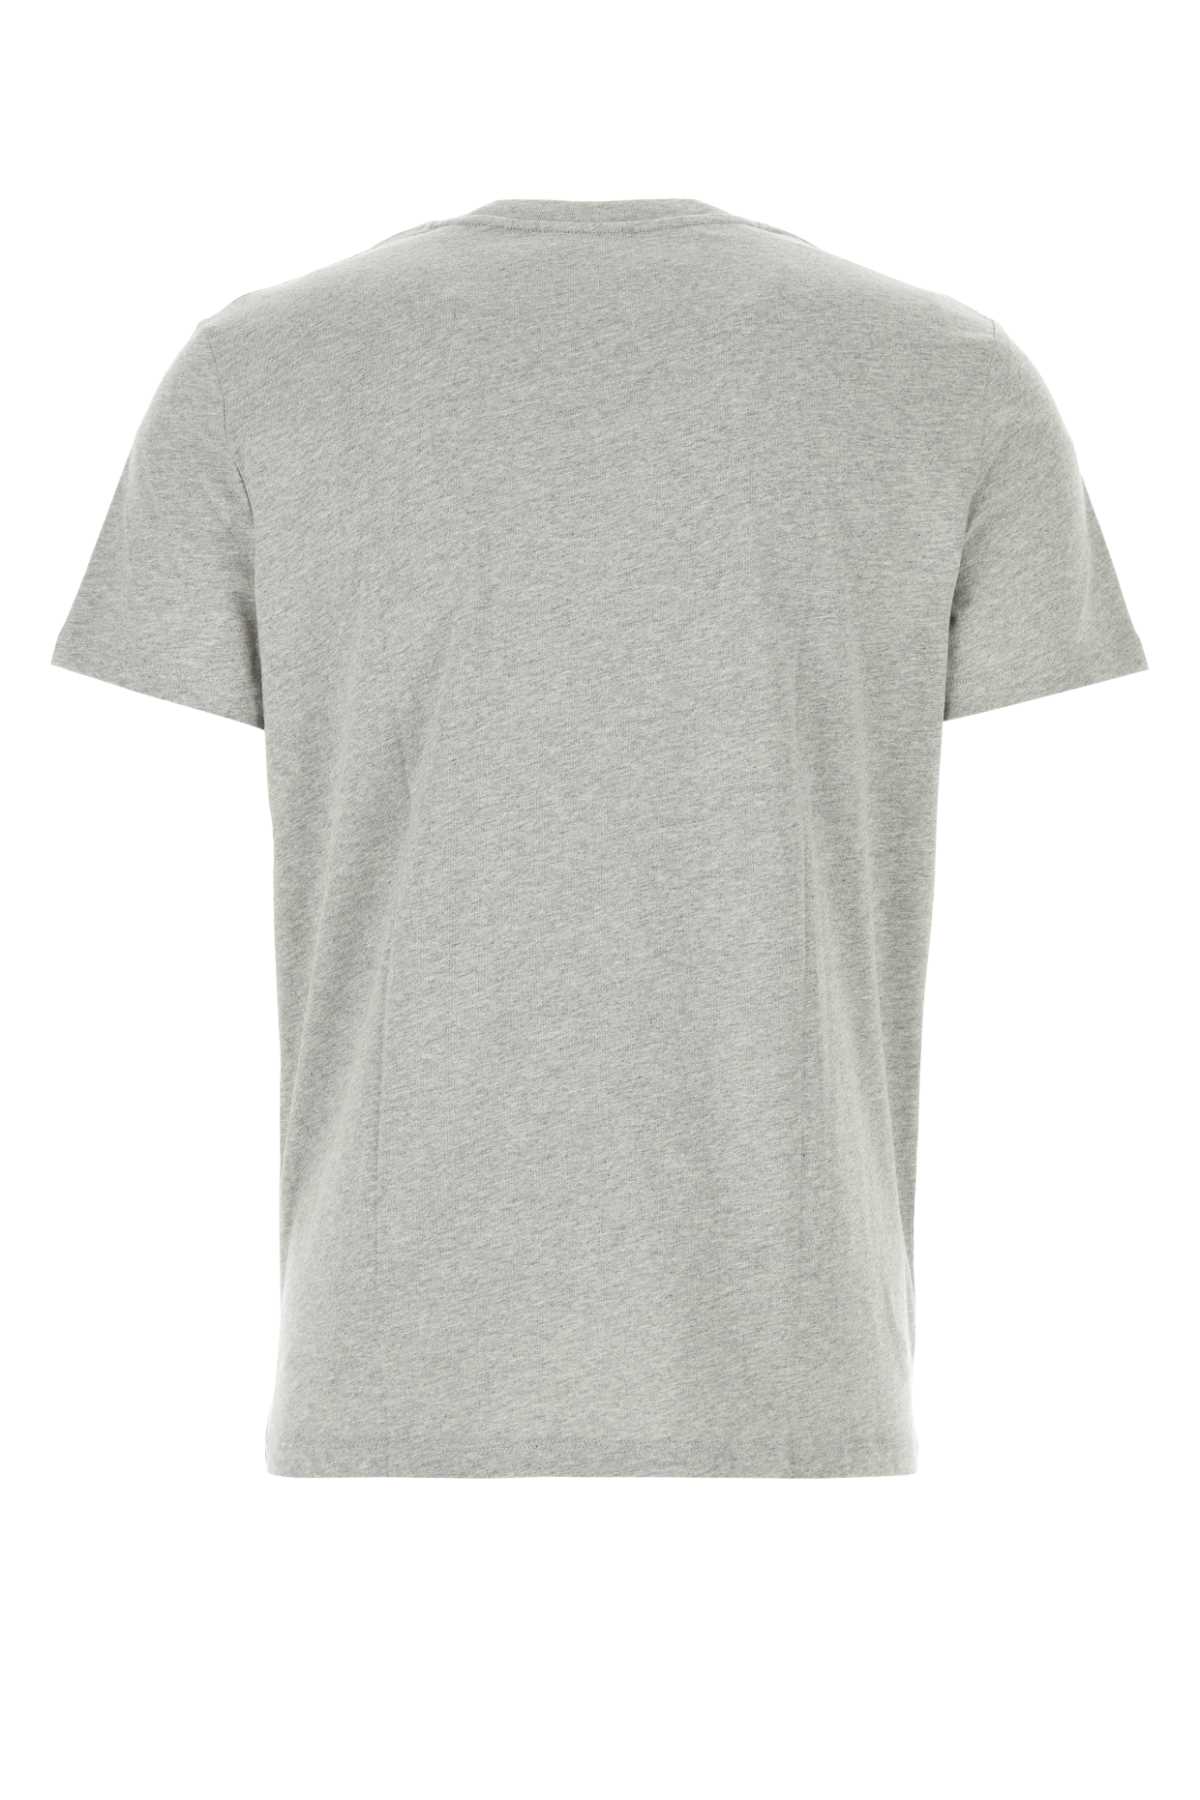 Apc Light Grey Cotton Vpc T-shirt In Plb